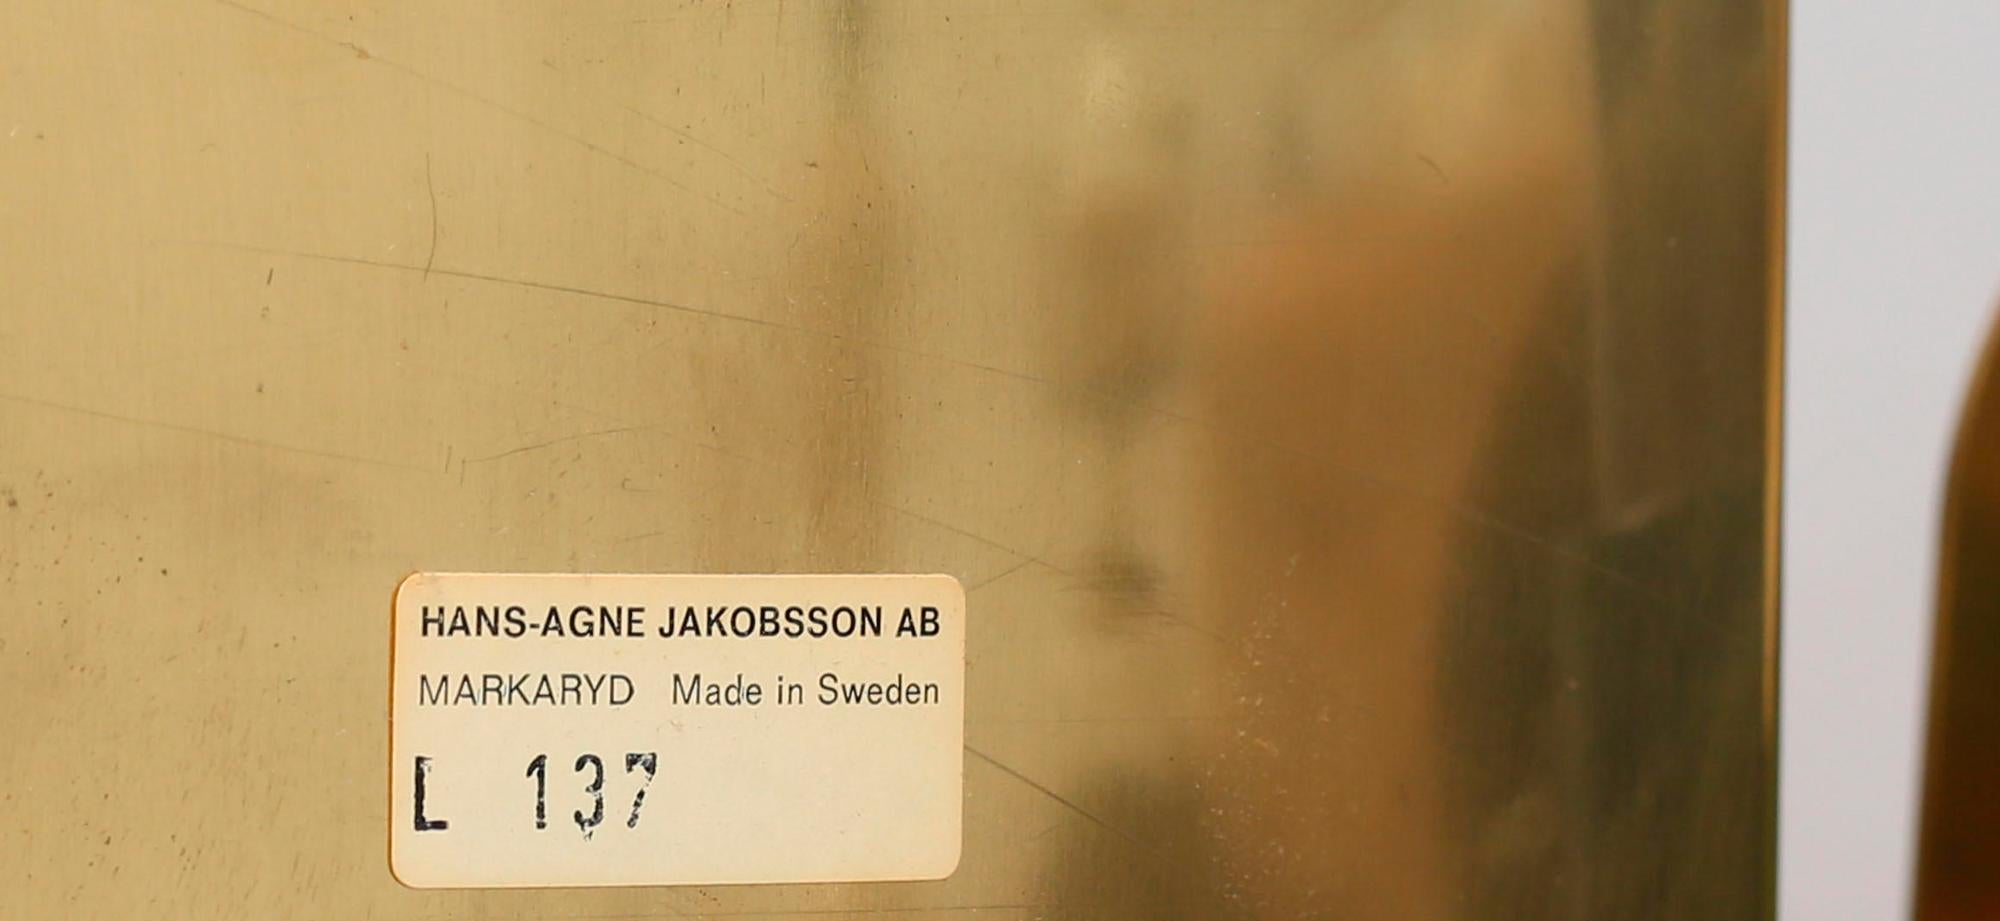 Swedish Pair of Scandinavian Modern Wall-scones, L137, by Hans Agne Jakobsson, Markaryd For Sale